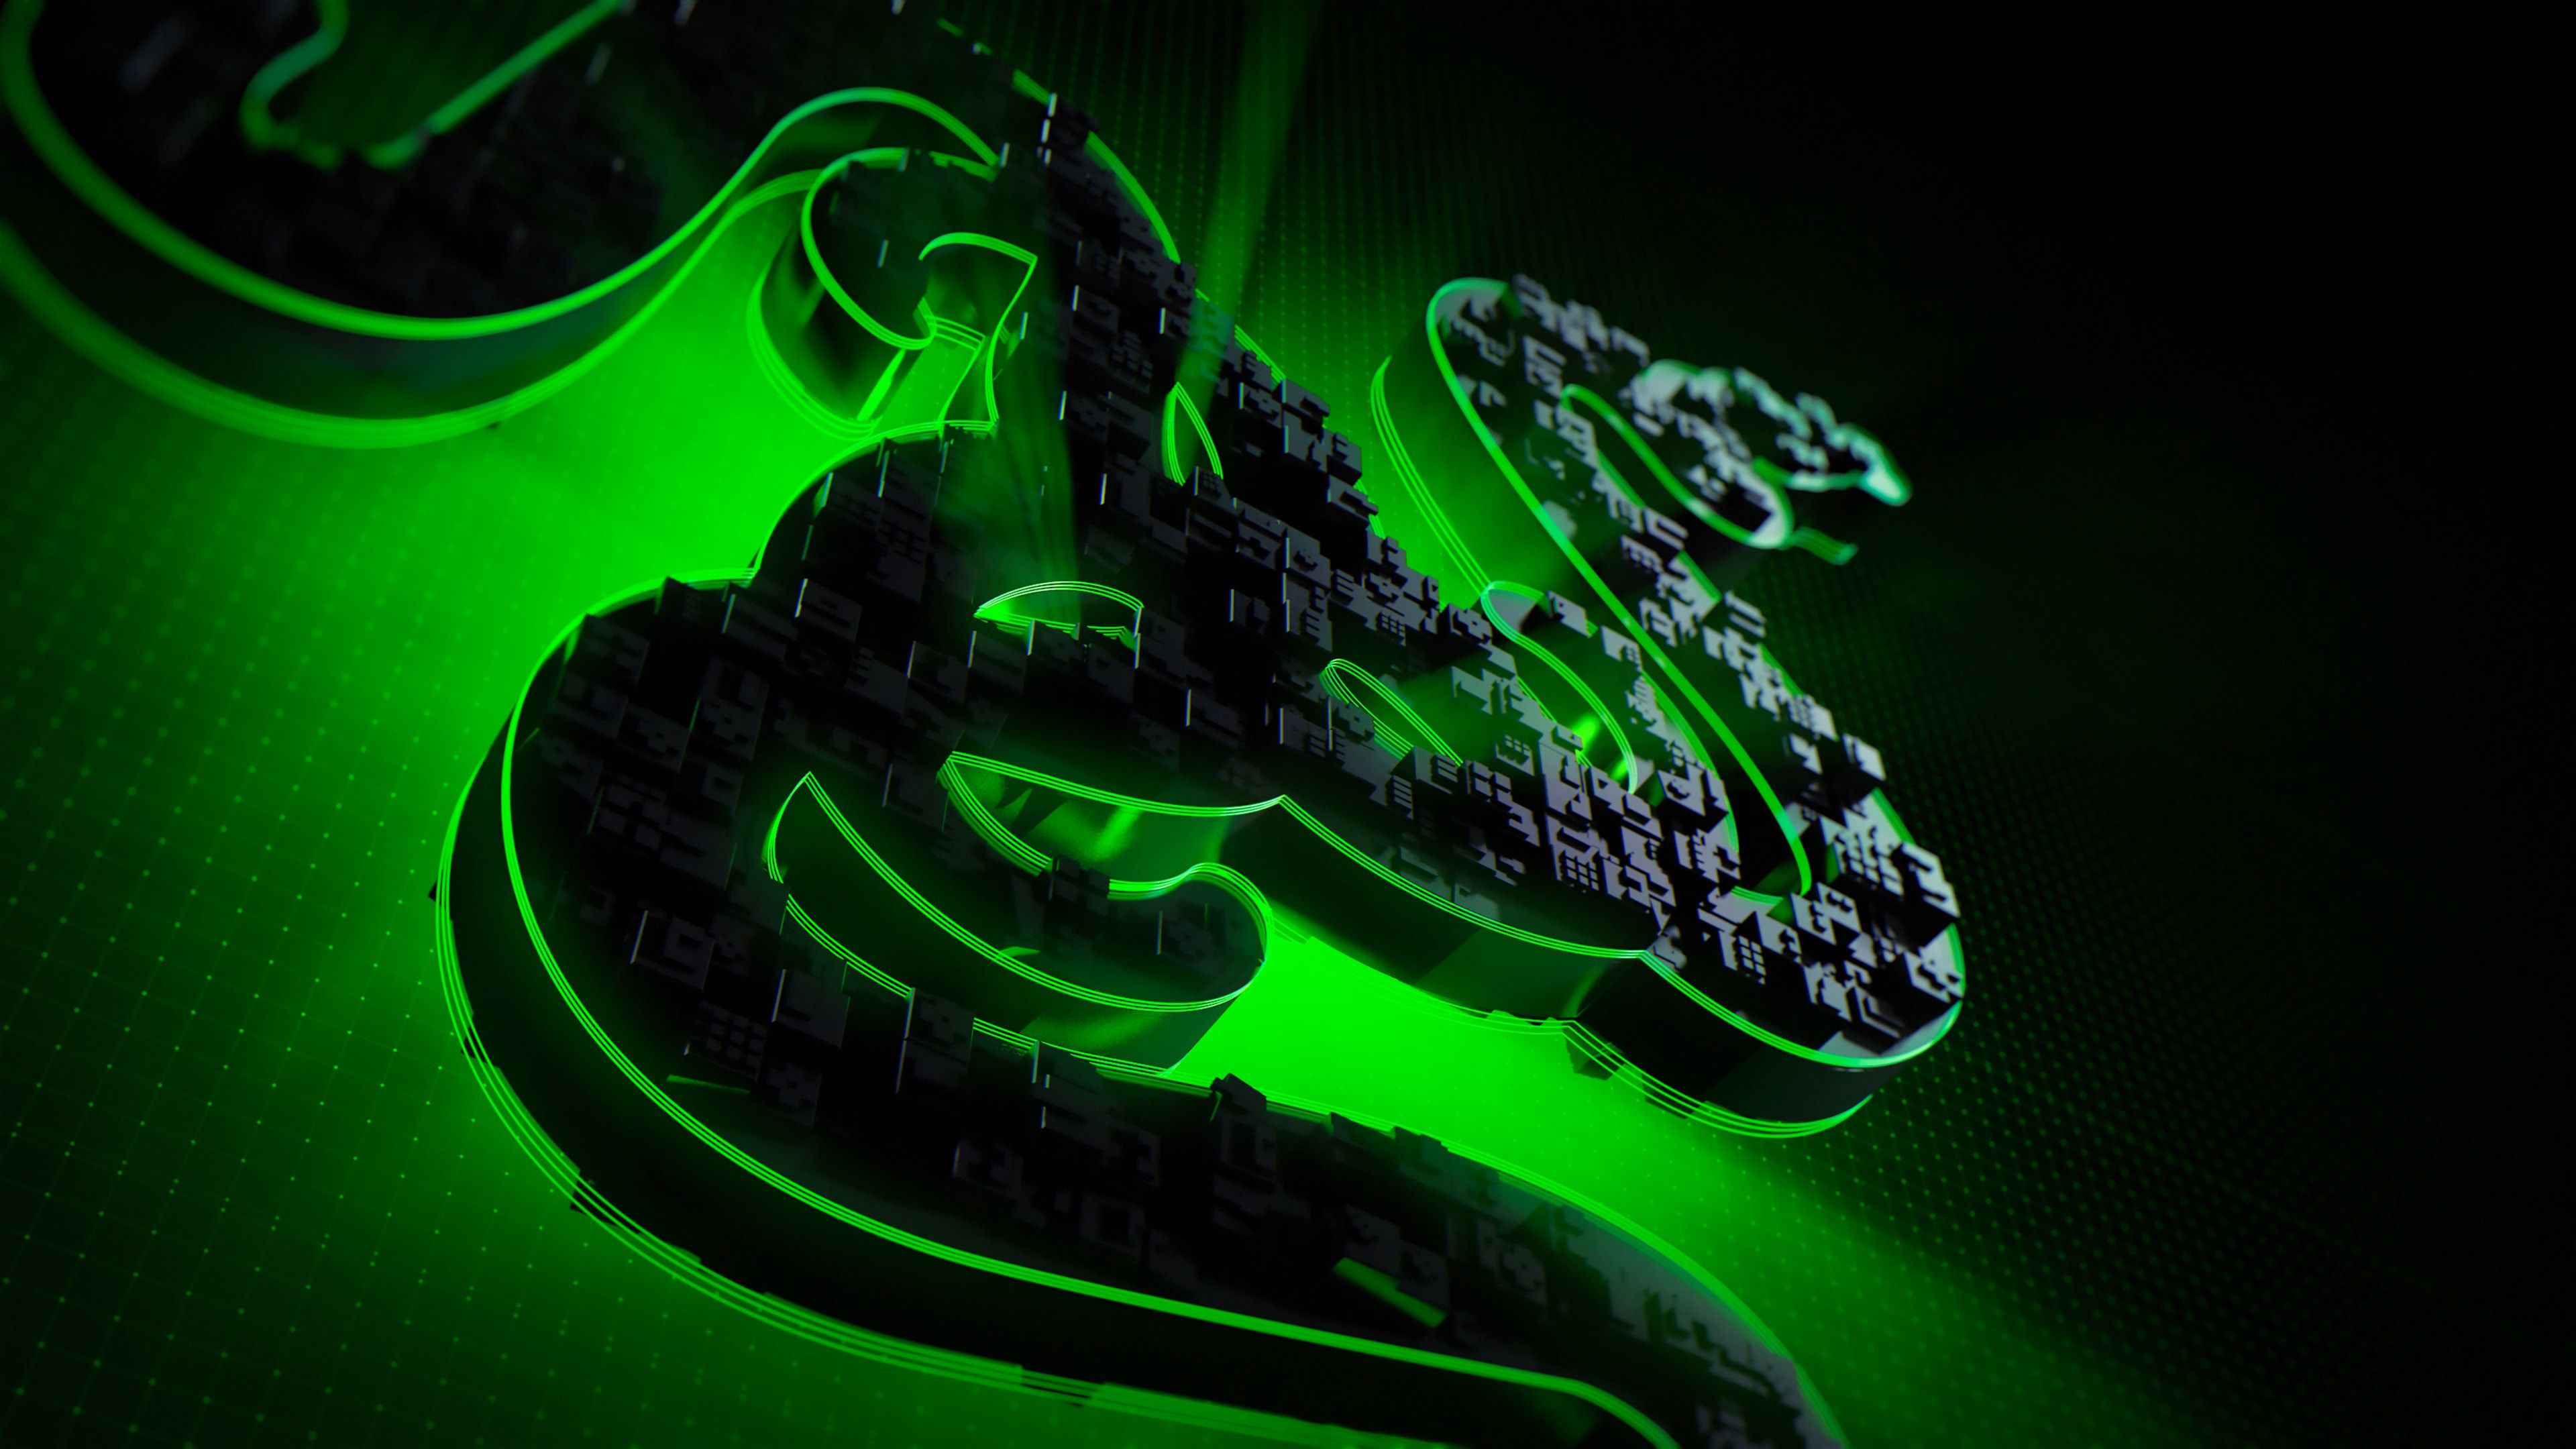 Green 3D Razer Logo 4k Wallpaper and Free